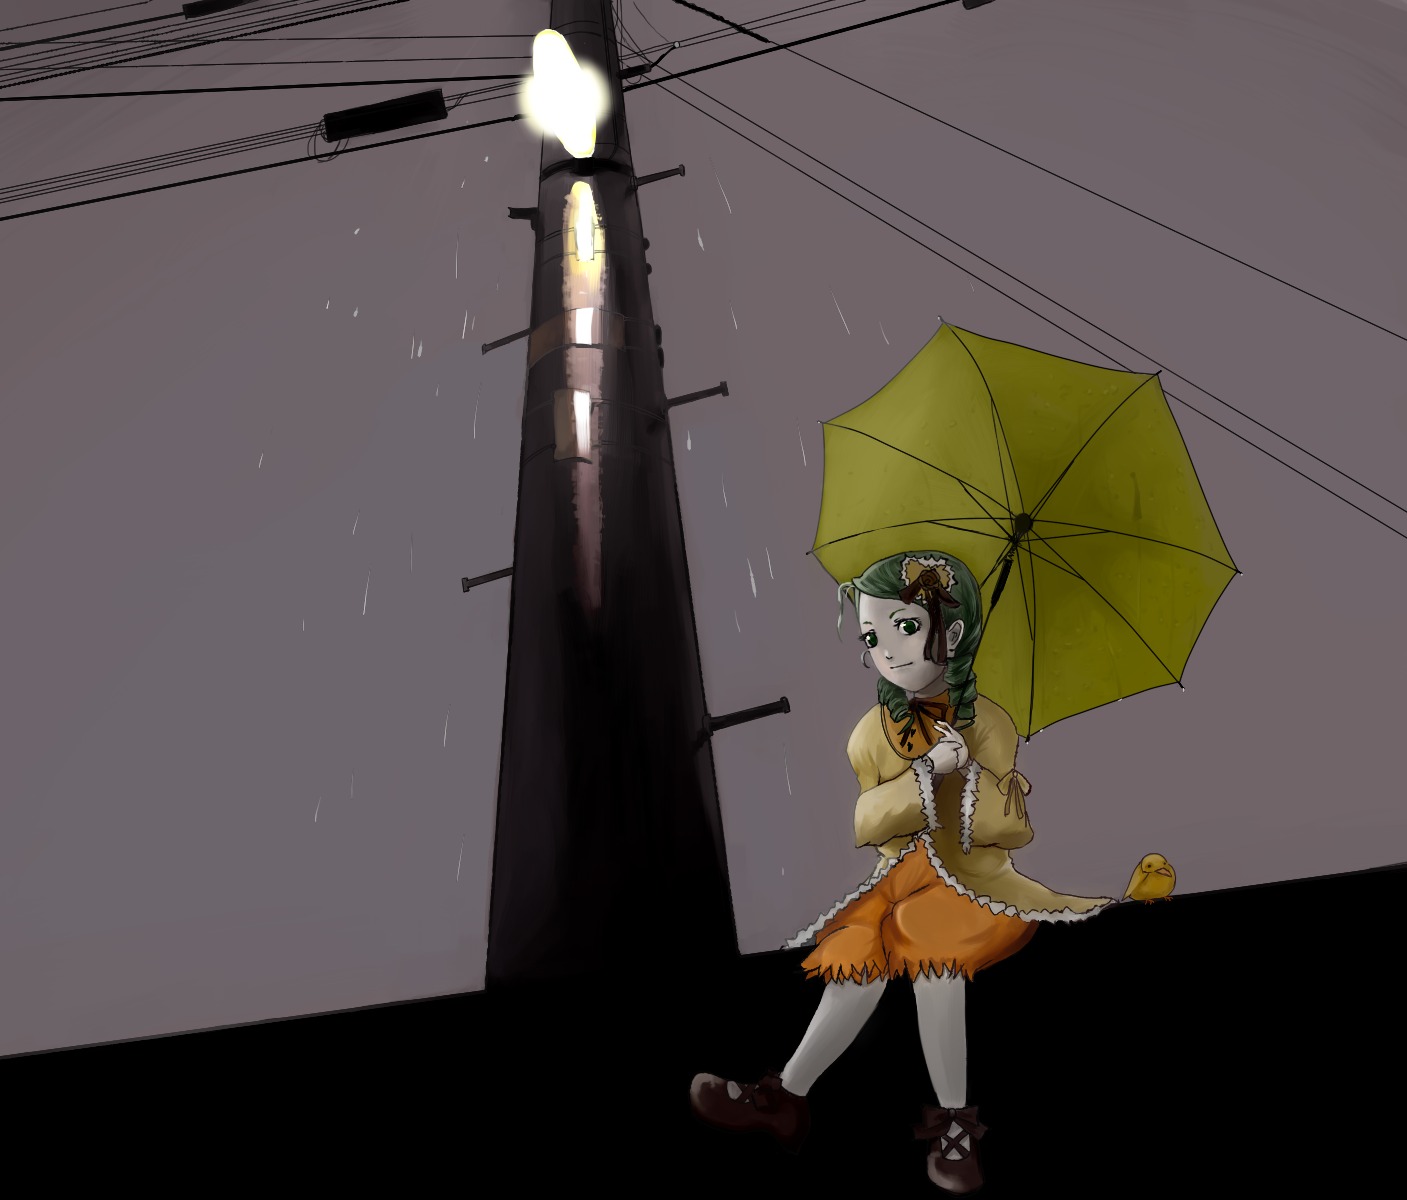 1girl green_eyes holding_umbrella image kanaria pantyhose parasol power_lines rain red_umbrella solo umbrella